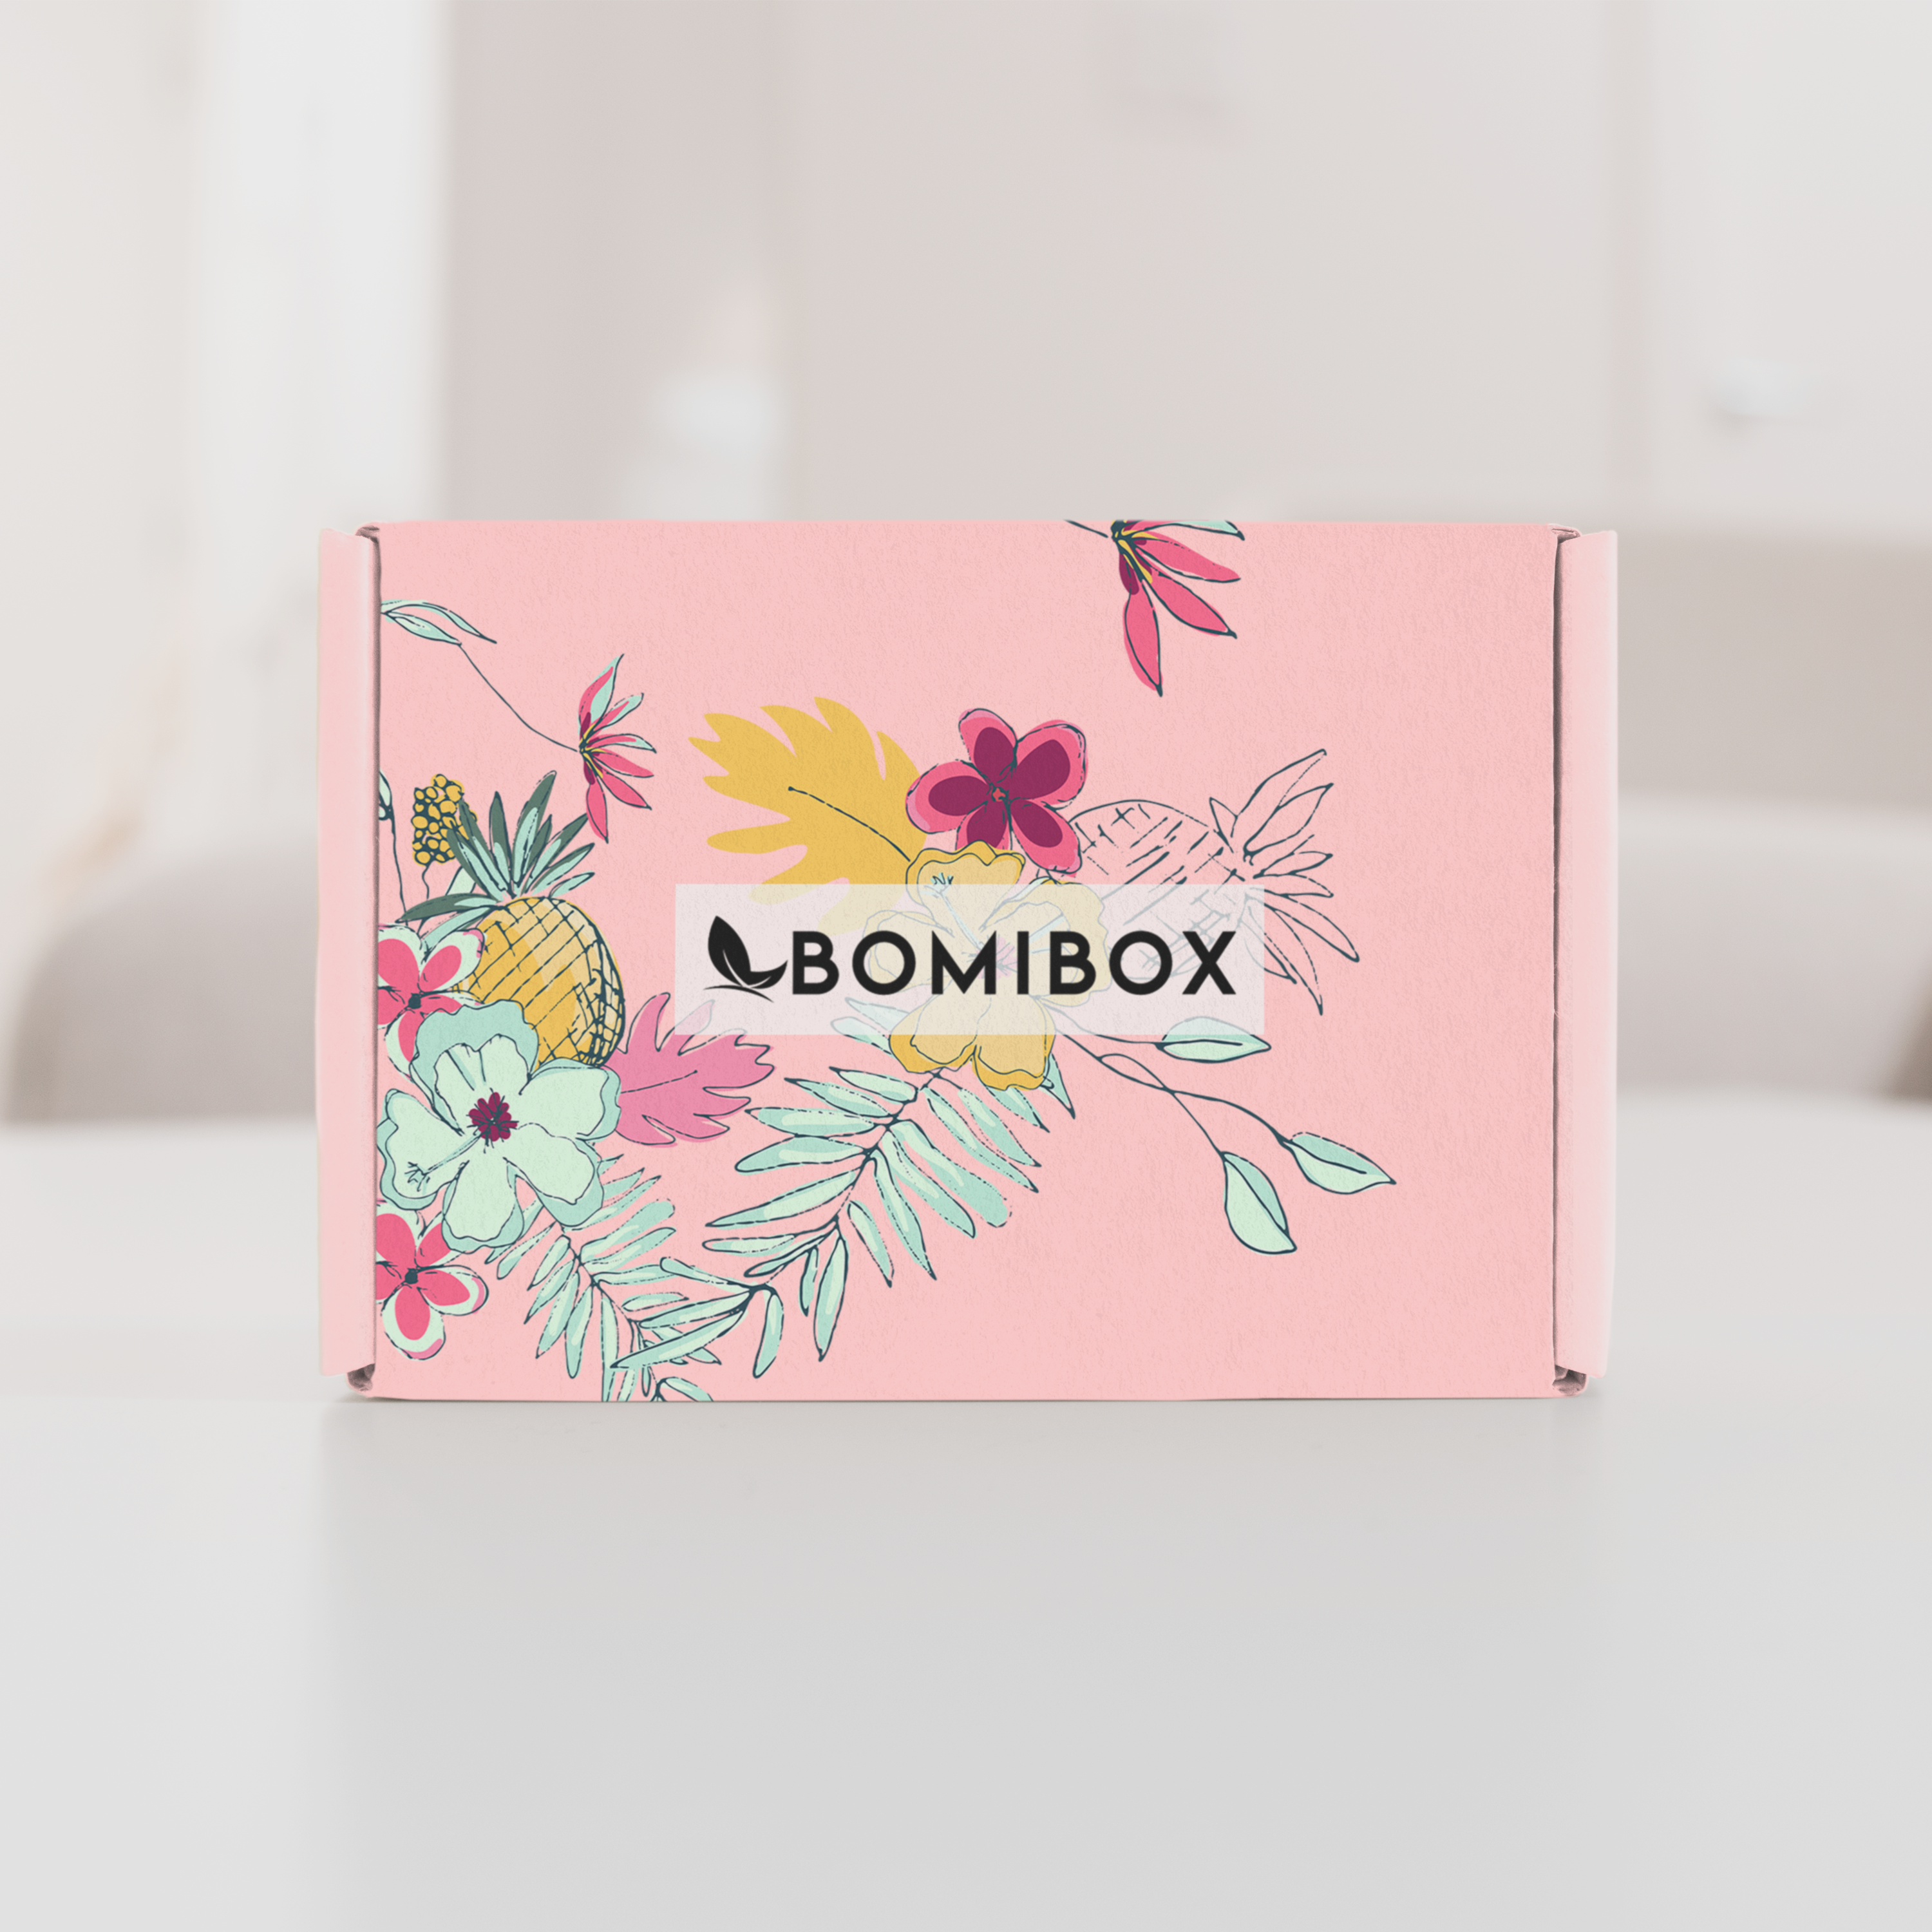 Past Boxes-Bomibox July 2019 - Korean Beauty Box Monthly Korean Skincare Subscription